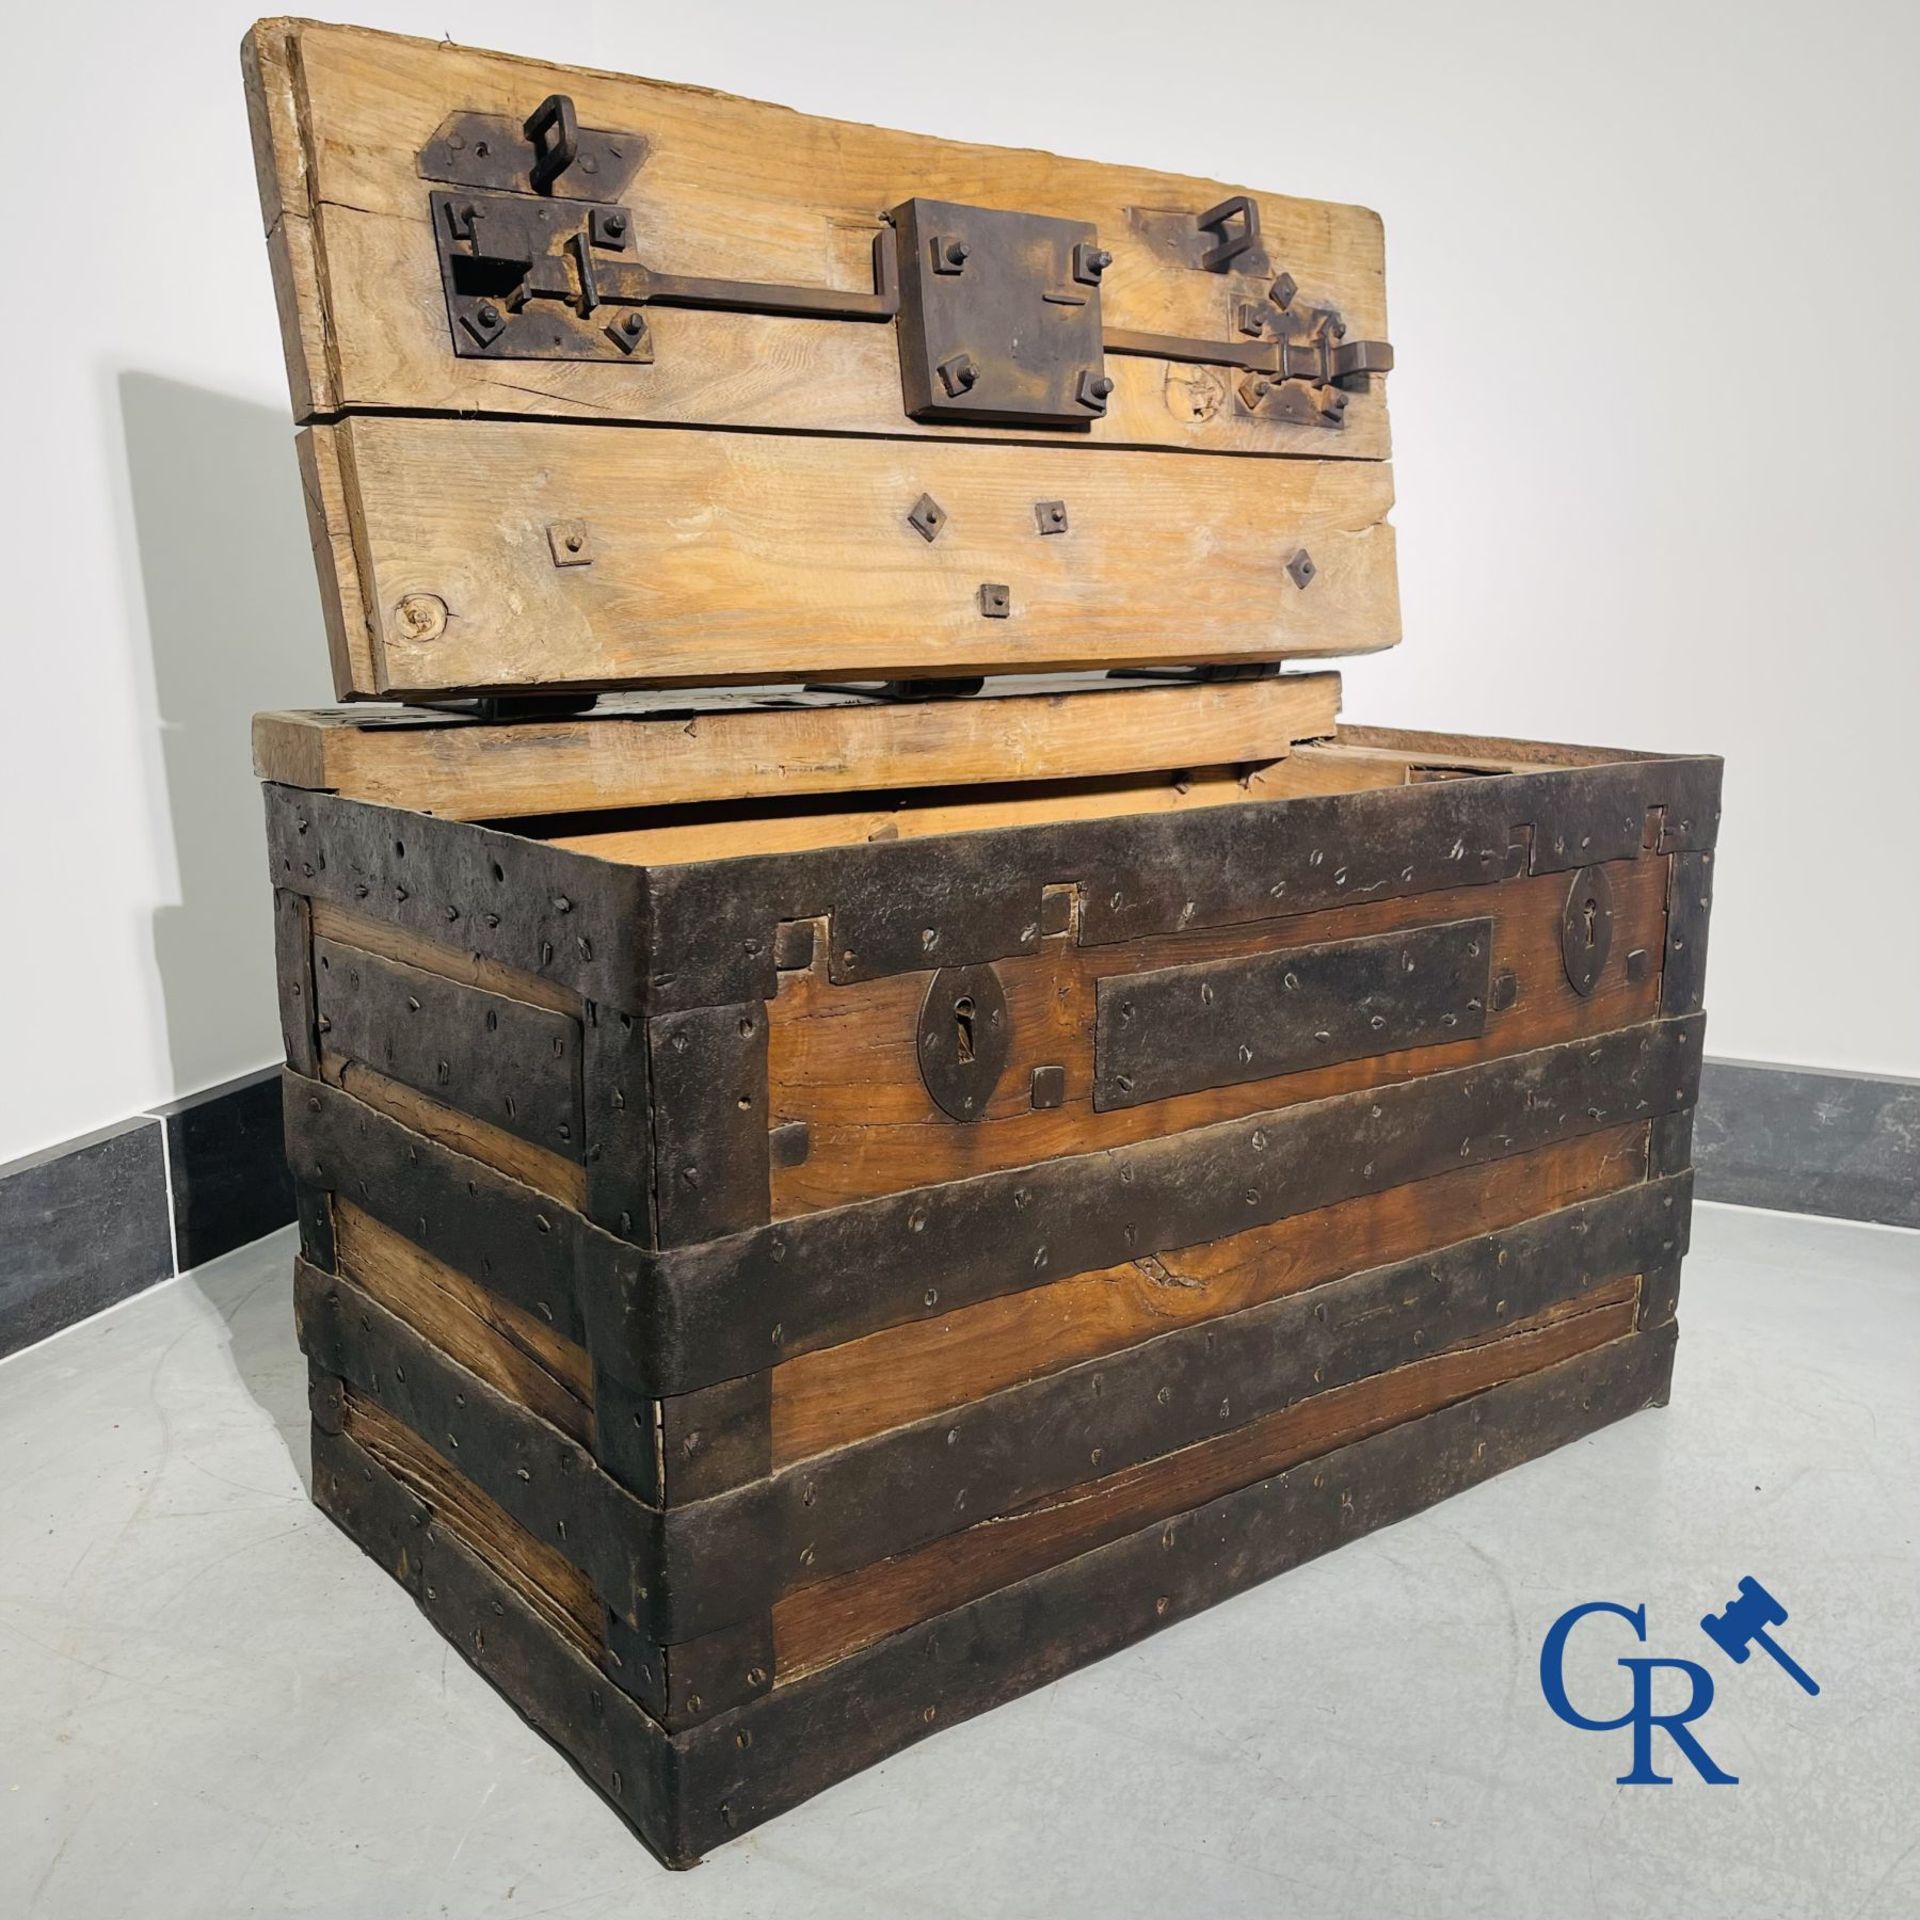 Antique wooden chest with hardware and lockwork in forging. - Bild 2 aus 21